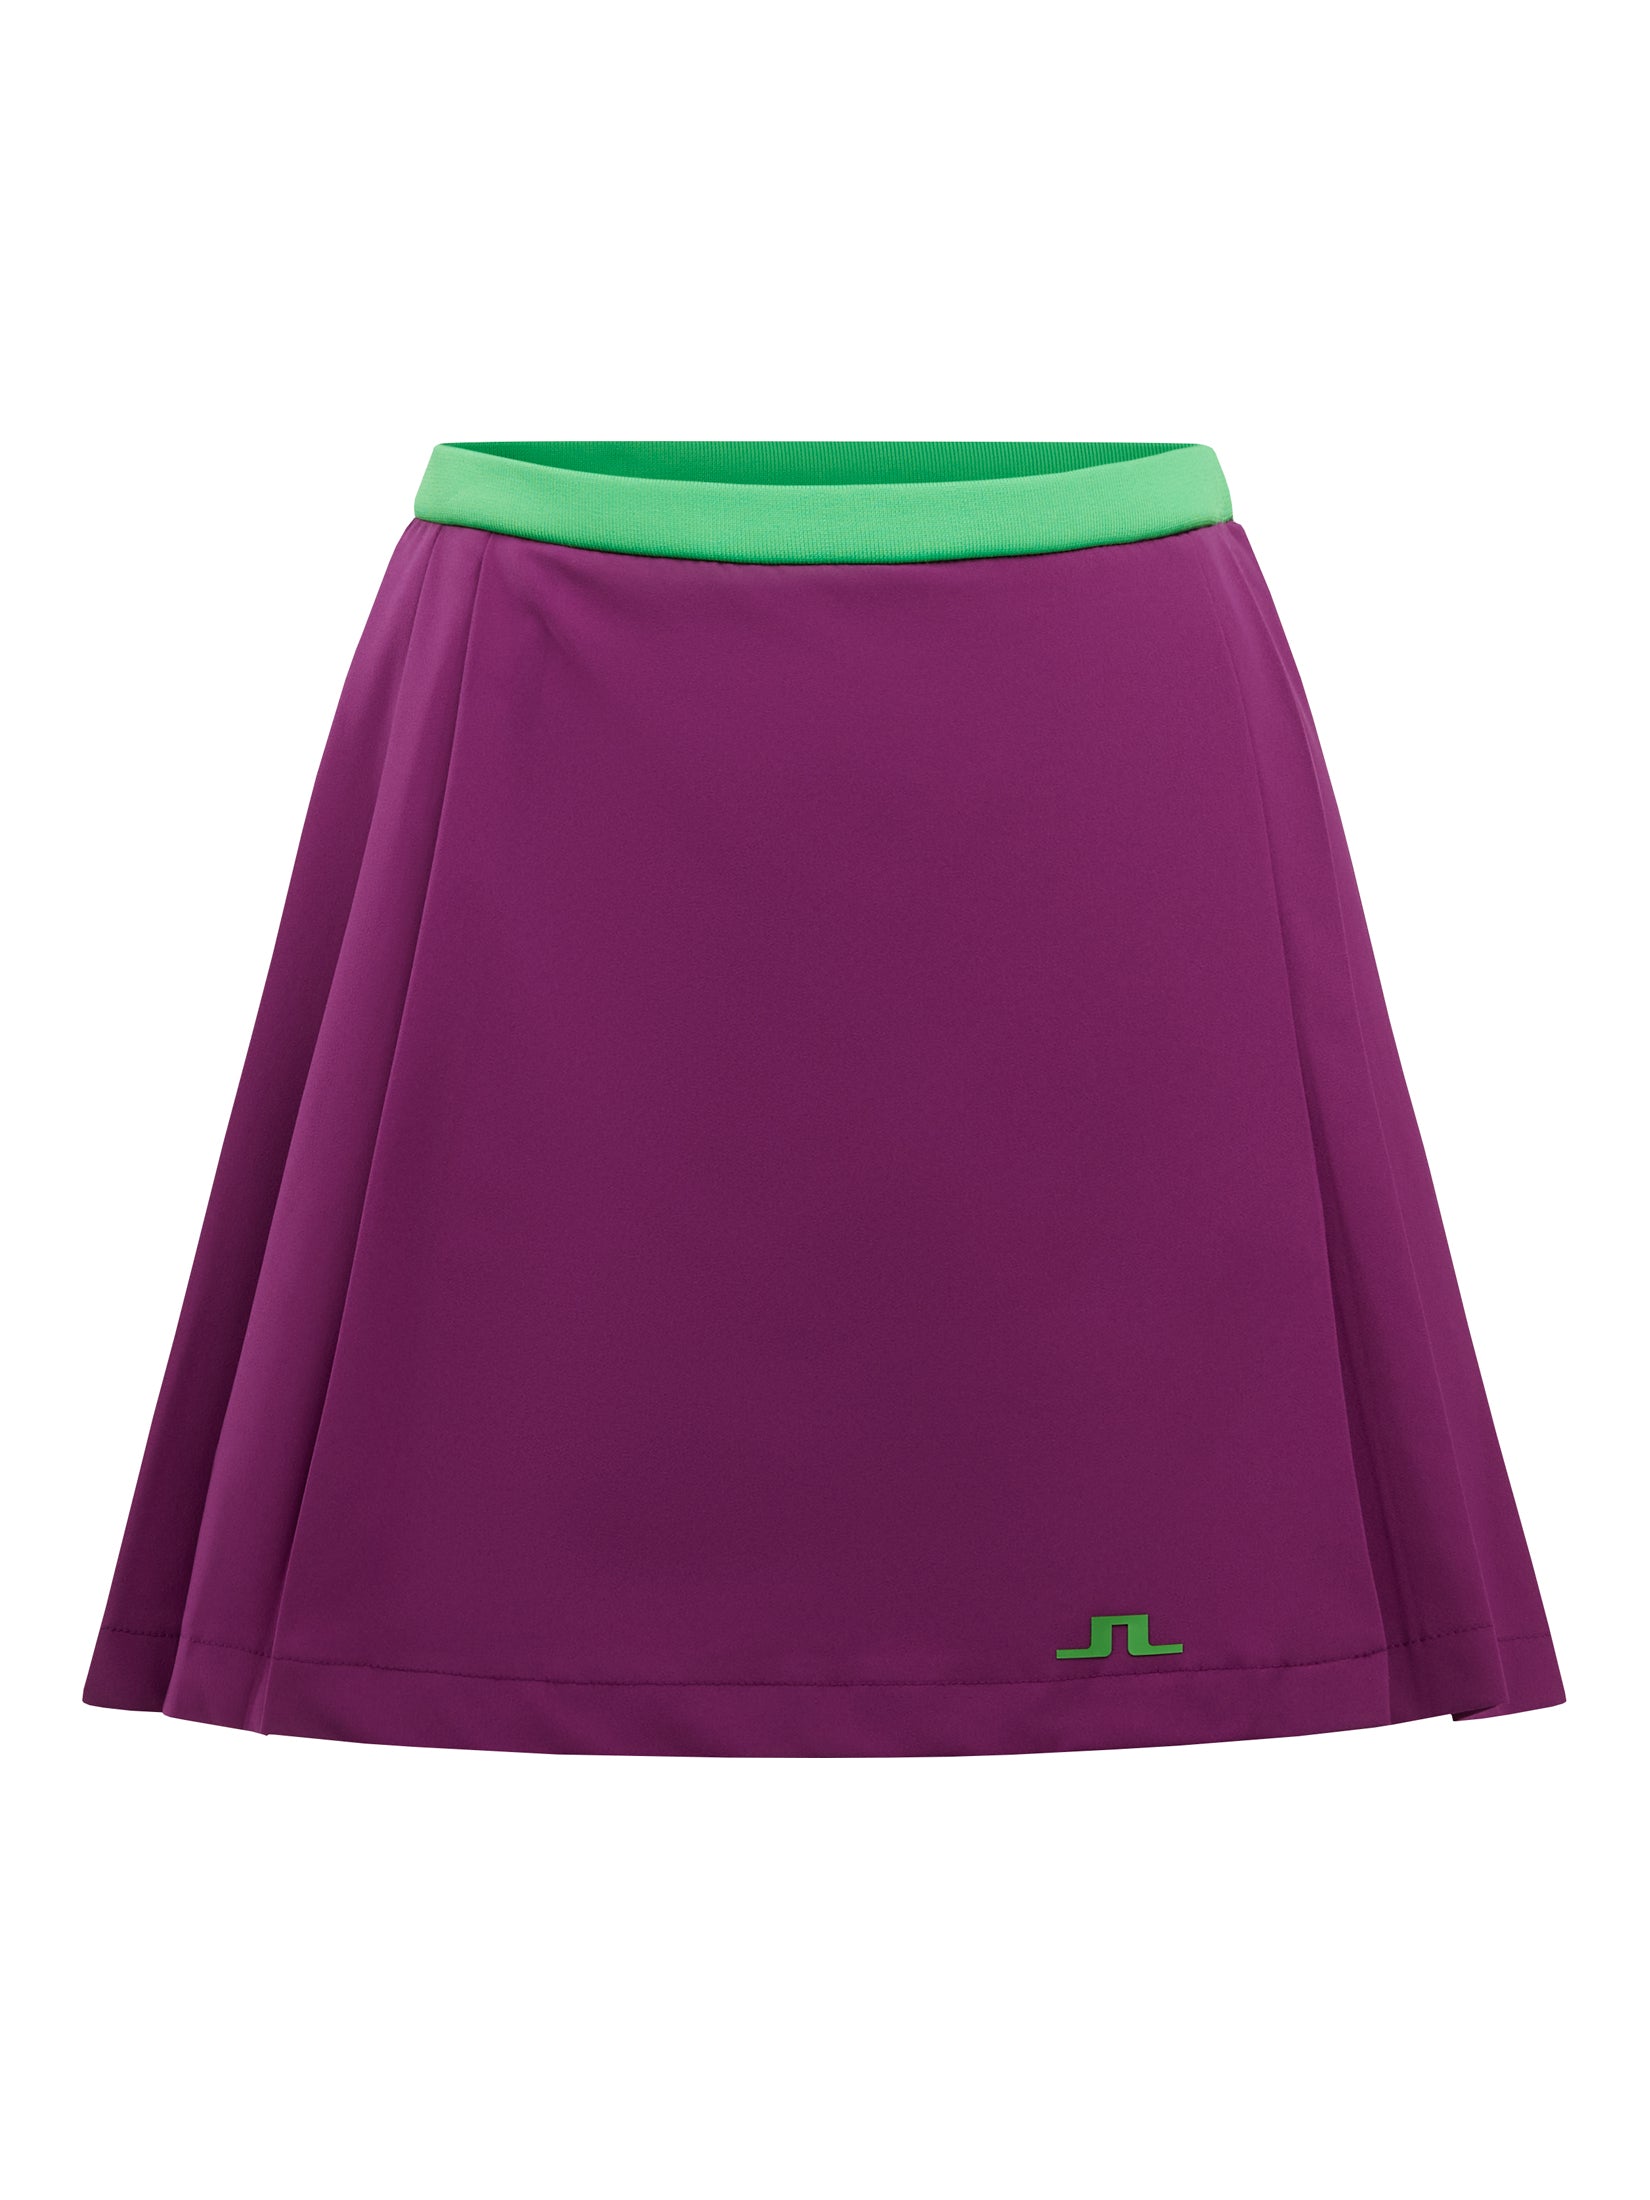 Sierra Pleat Skirt